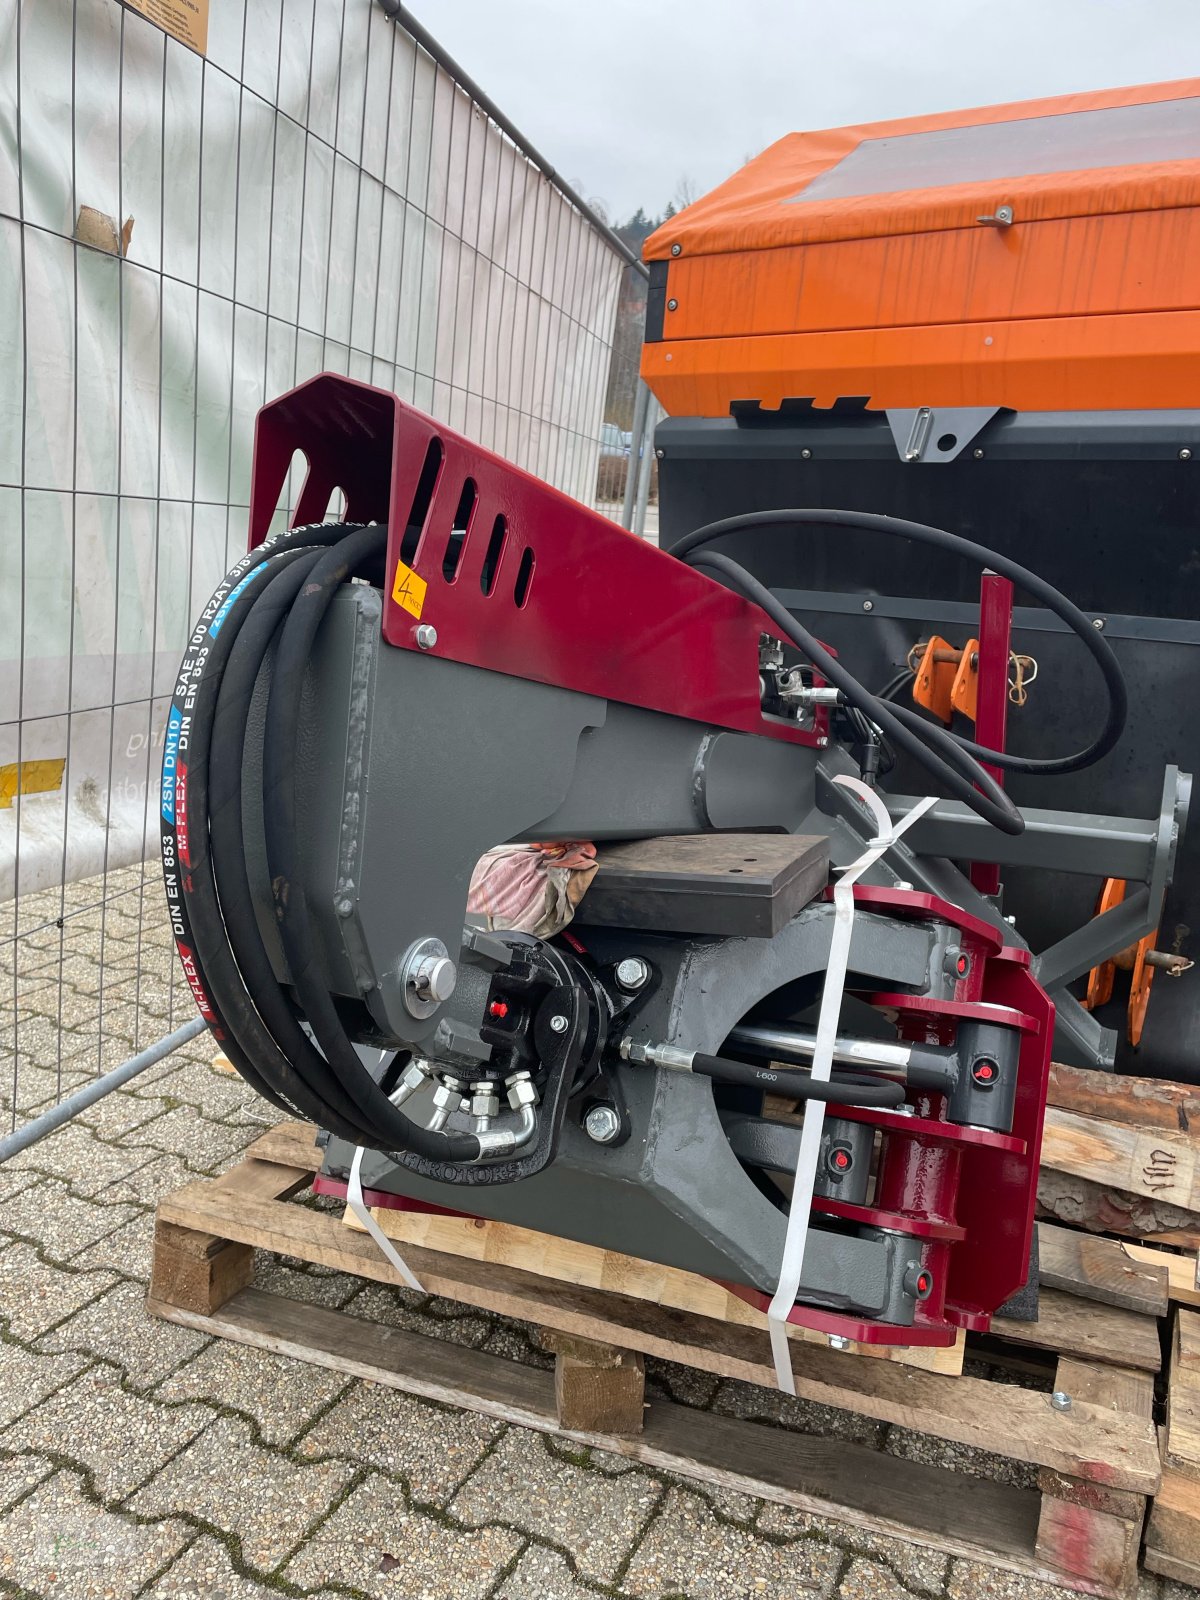 Ladekrane & Rückezange des Typs PreissTec Rückezange hydr. mit Rotator 4t, Neumaschine in Bad Kötzting (Bild 1)